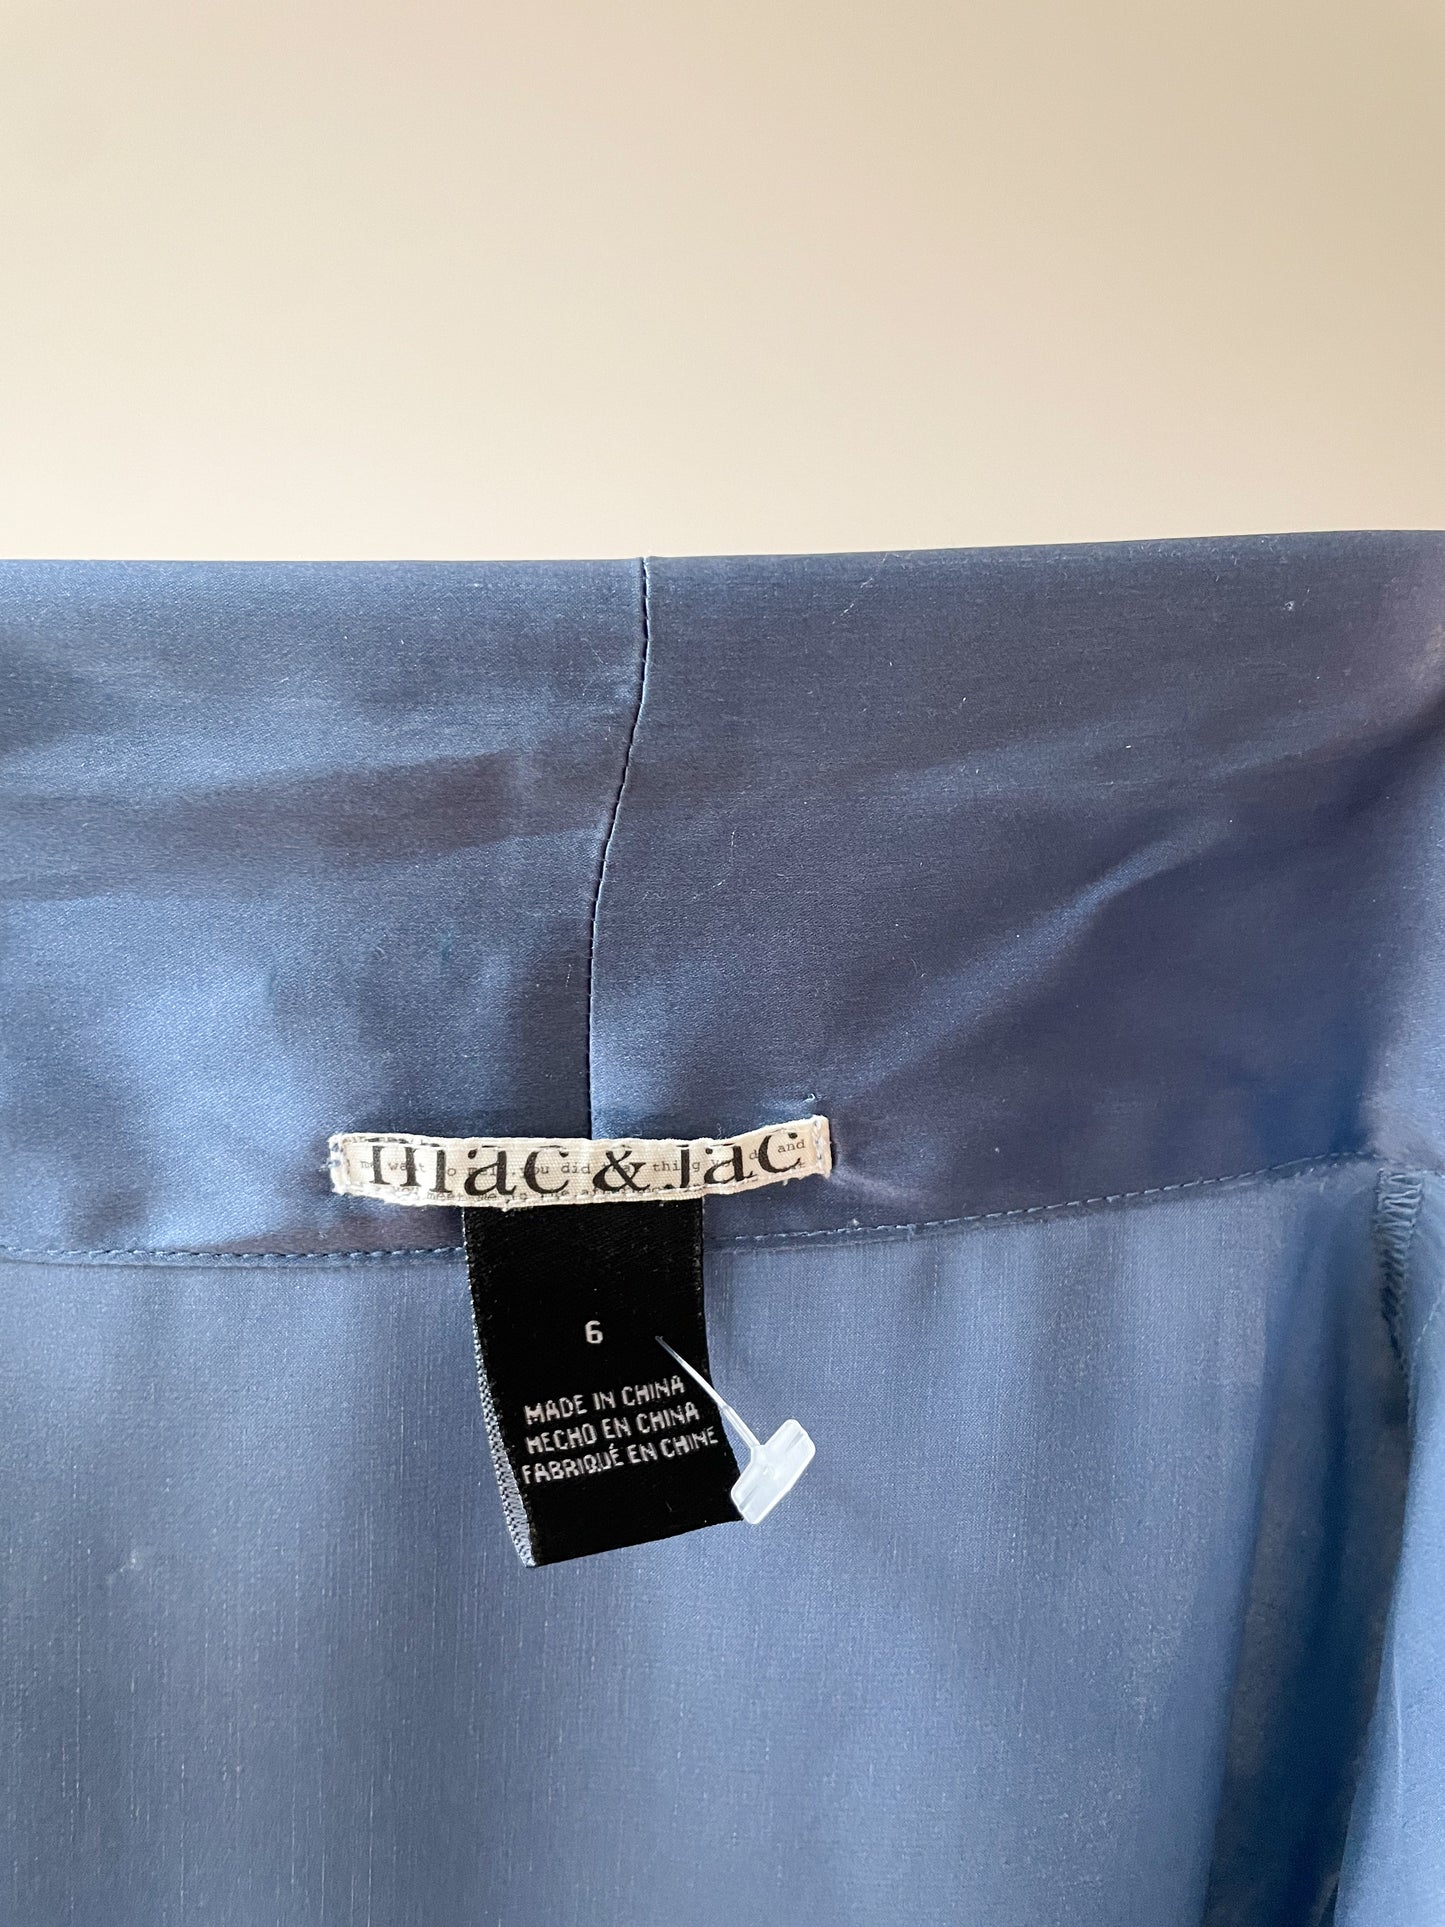 Mac & Jac Blue 100% Silk Neck Tie Button Up Front Top - Size 6